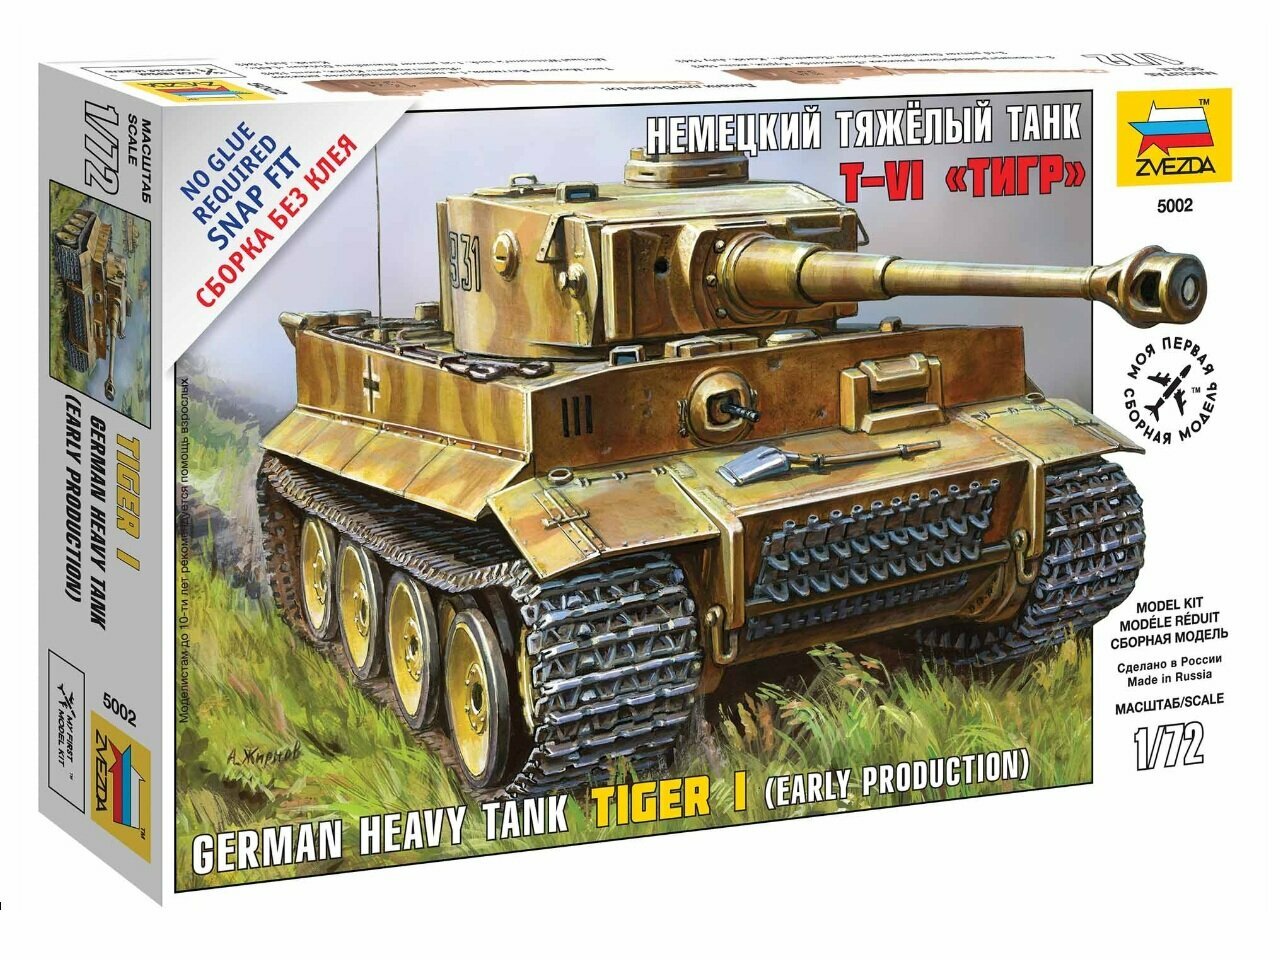 5002 Звезда Немецкий тяжелый танк T-VI "Тигр" Сборная модель (1:72)